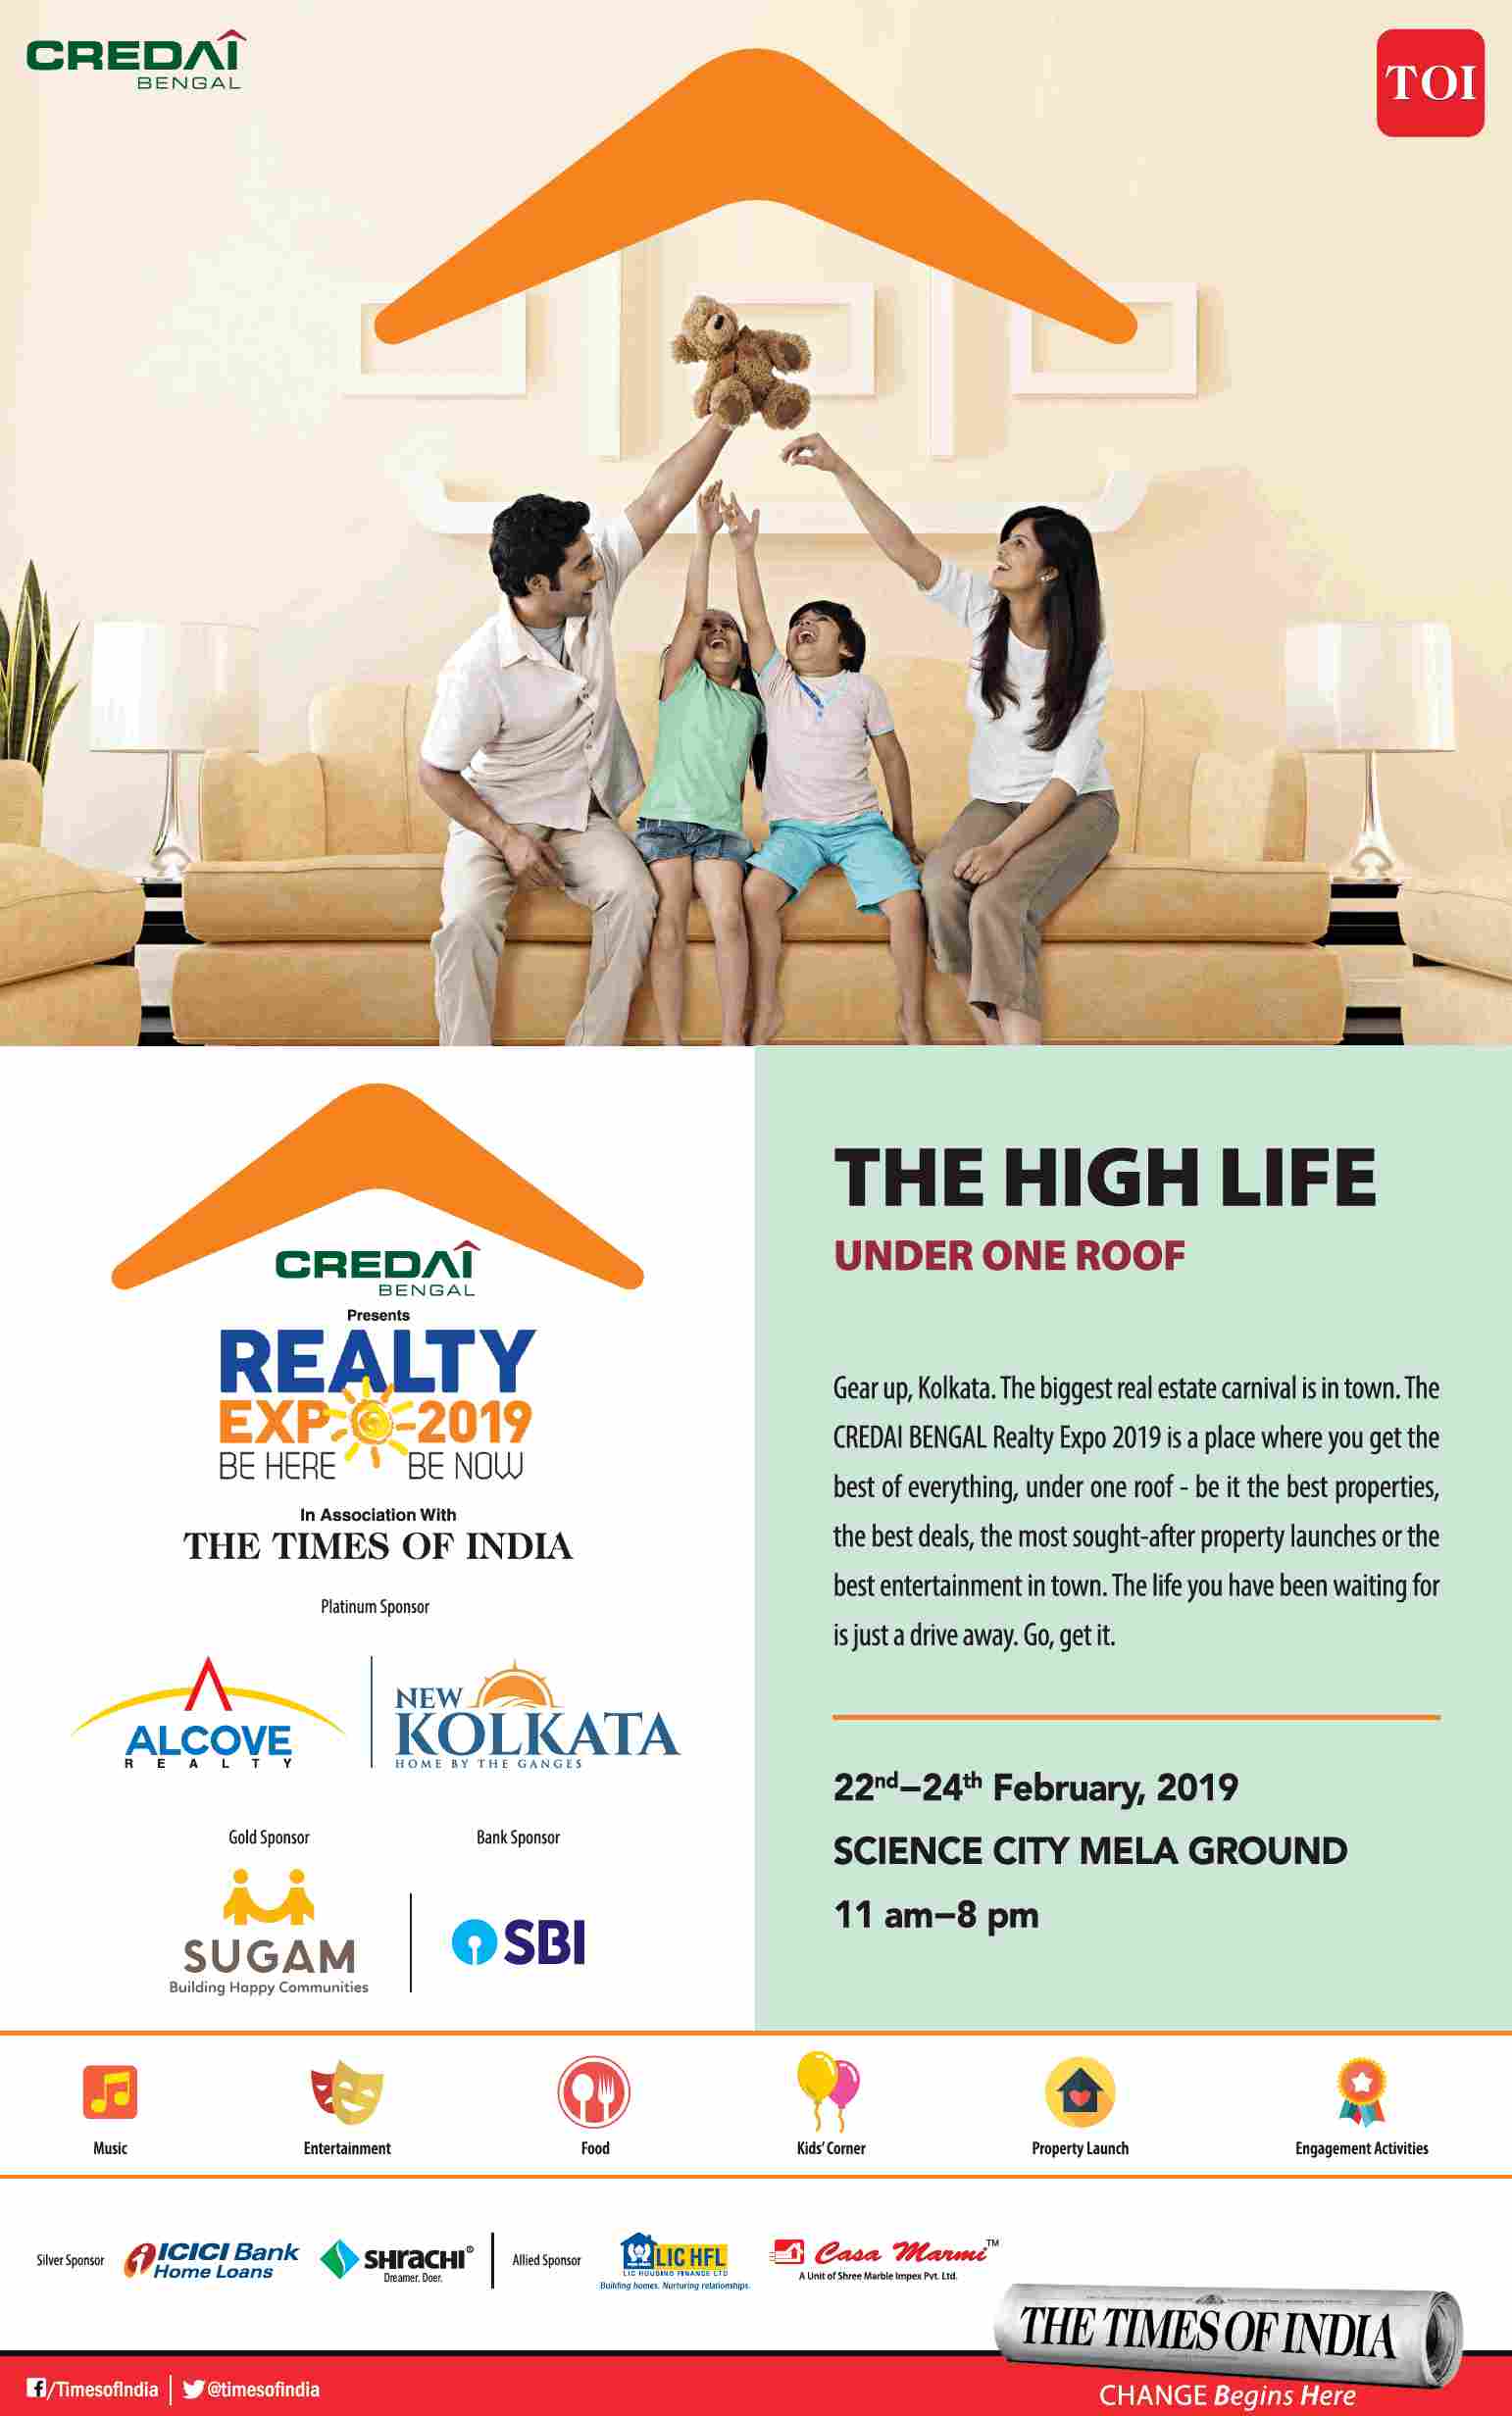 Presenting CREDAI BENGAL Realty Expo 2019 in Kolkata